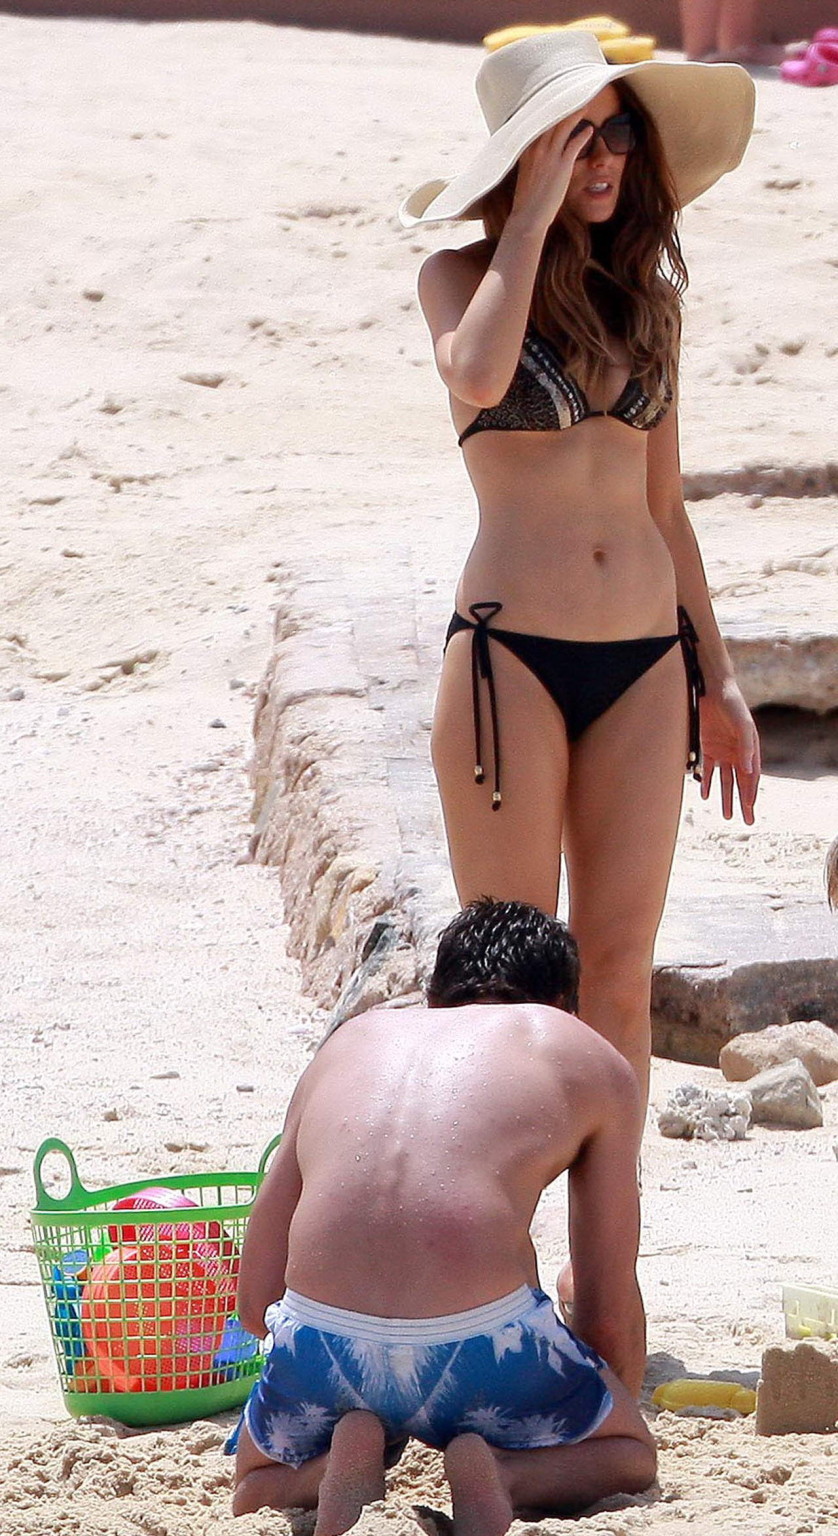 Kate Beckinsale wearing bikini  high heels on a Mexican beach #75334515